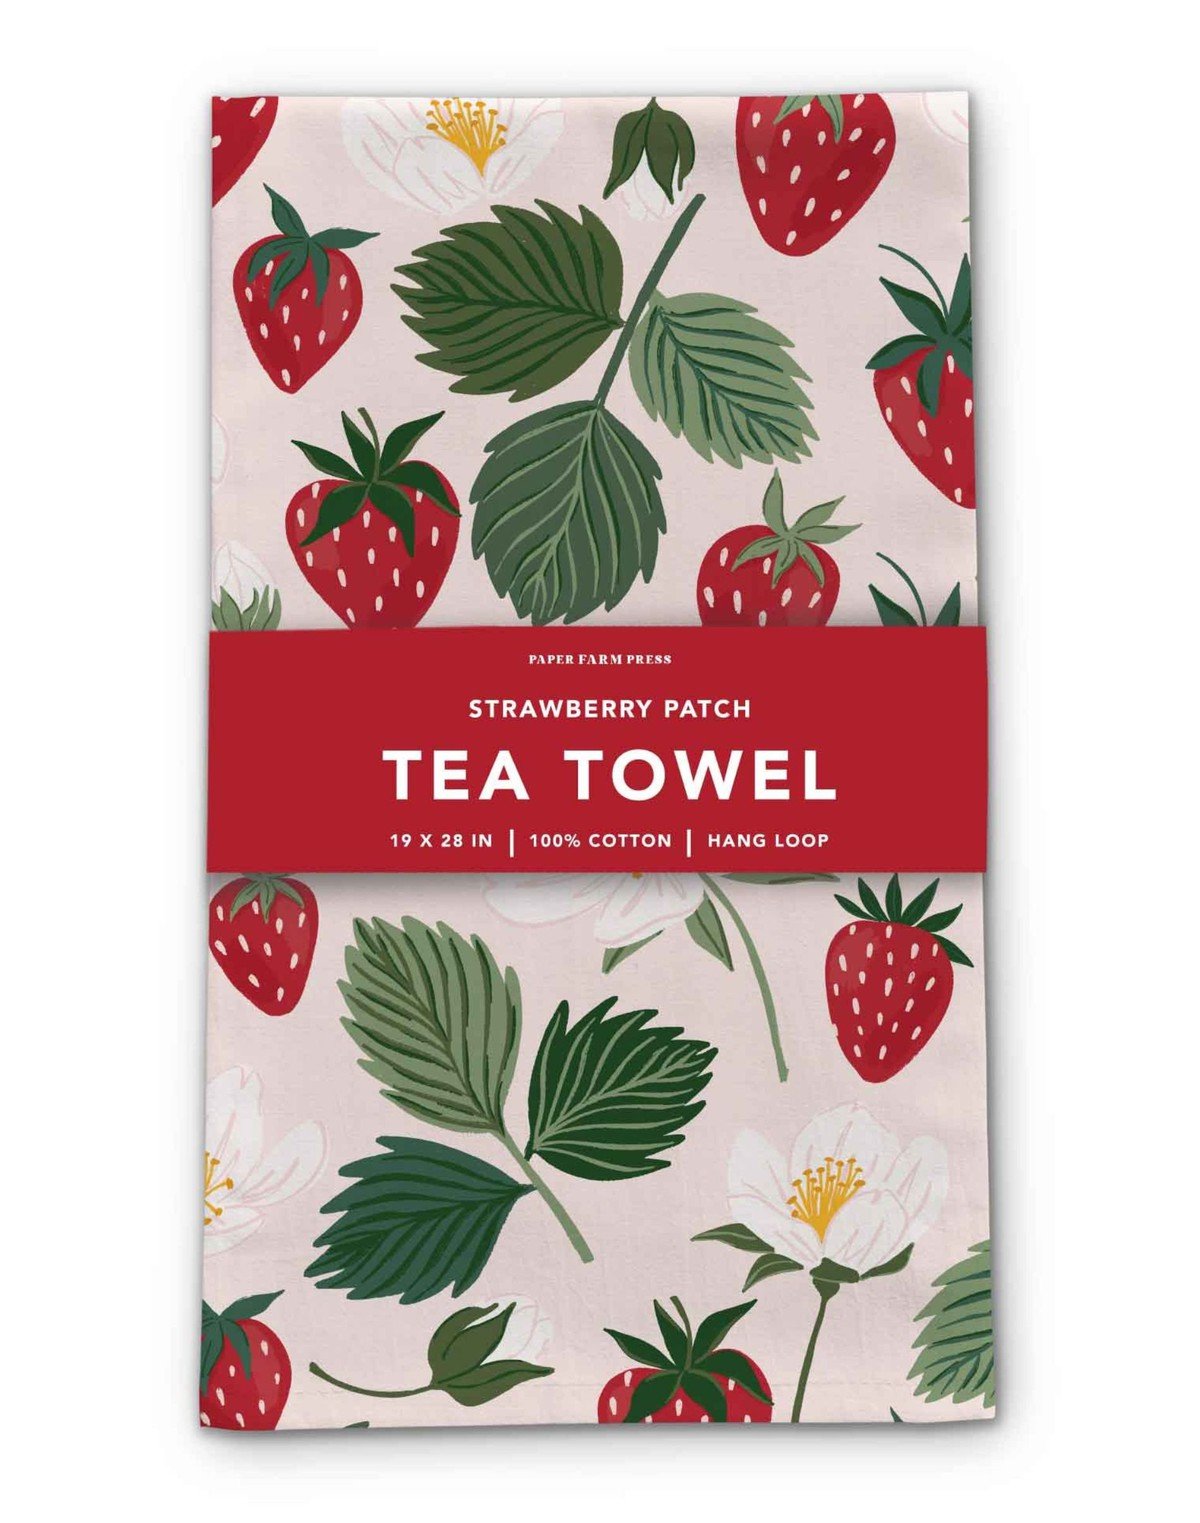 Strawberry Patch Tea Towel item